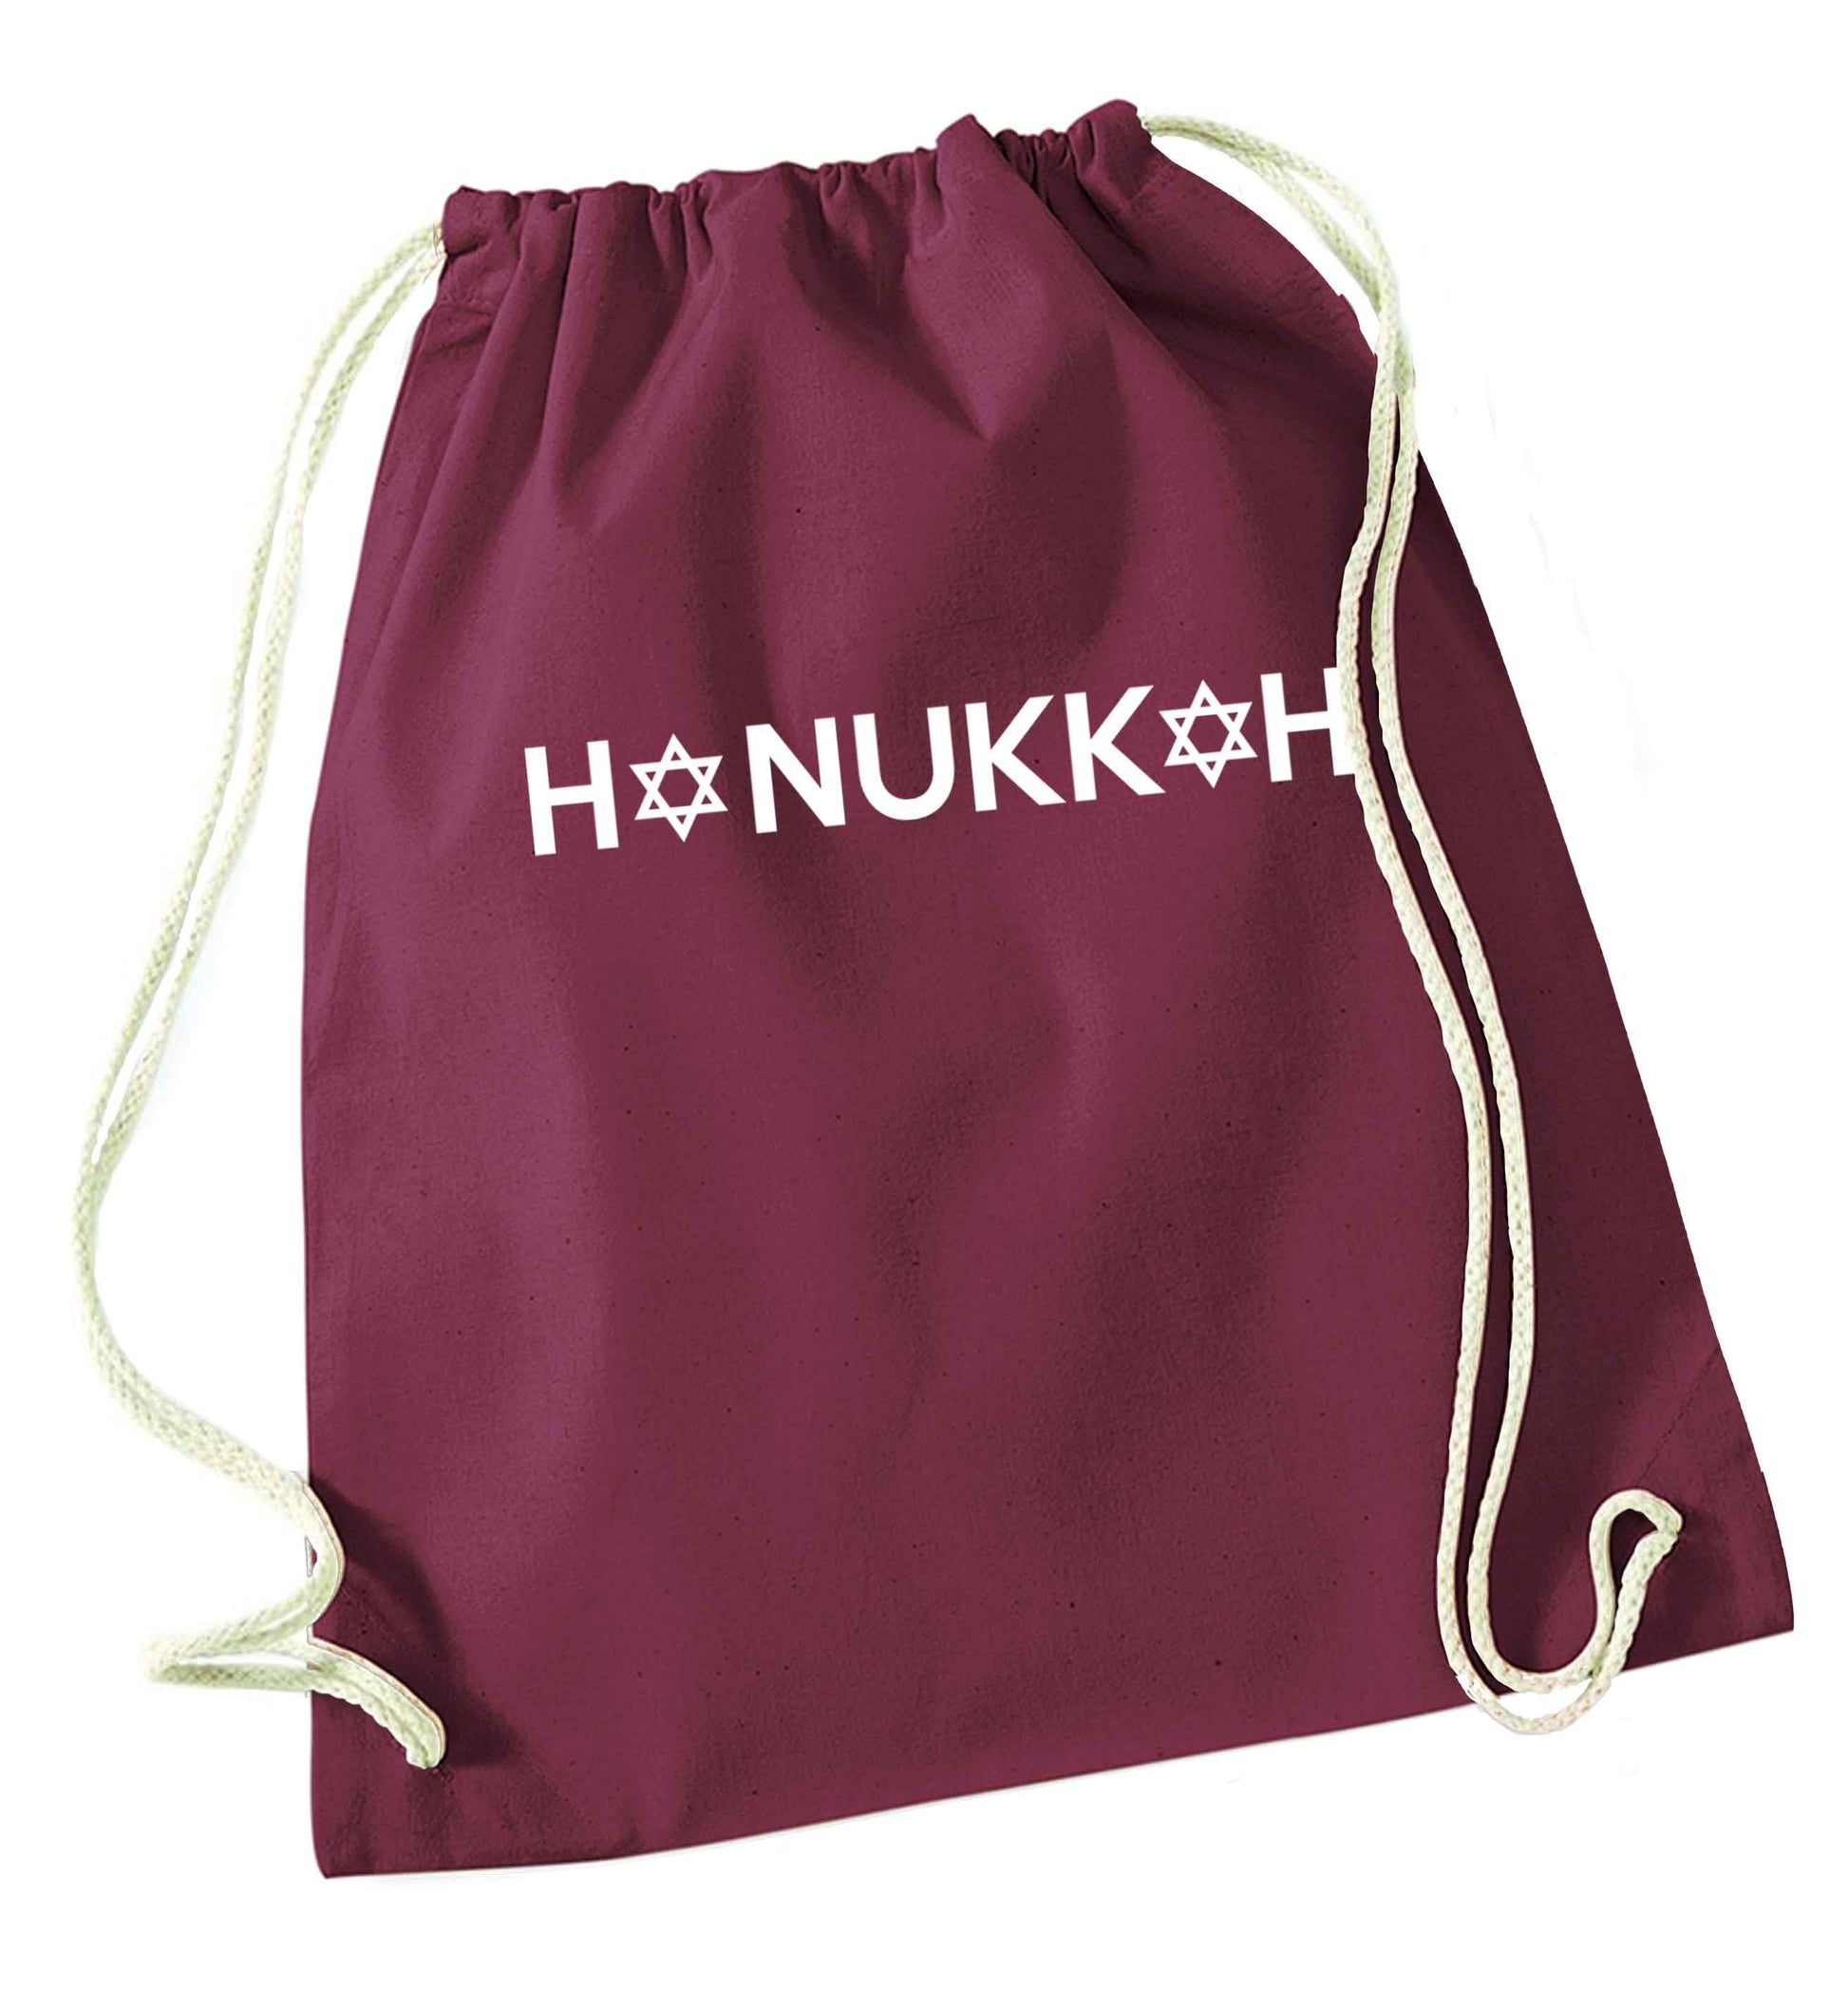 Hanukkah star of david maroon drawstring bag